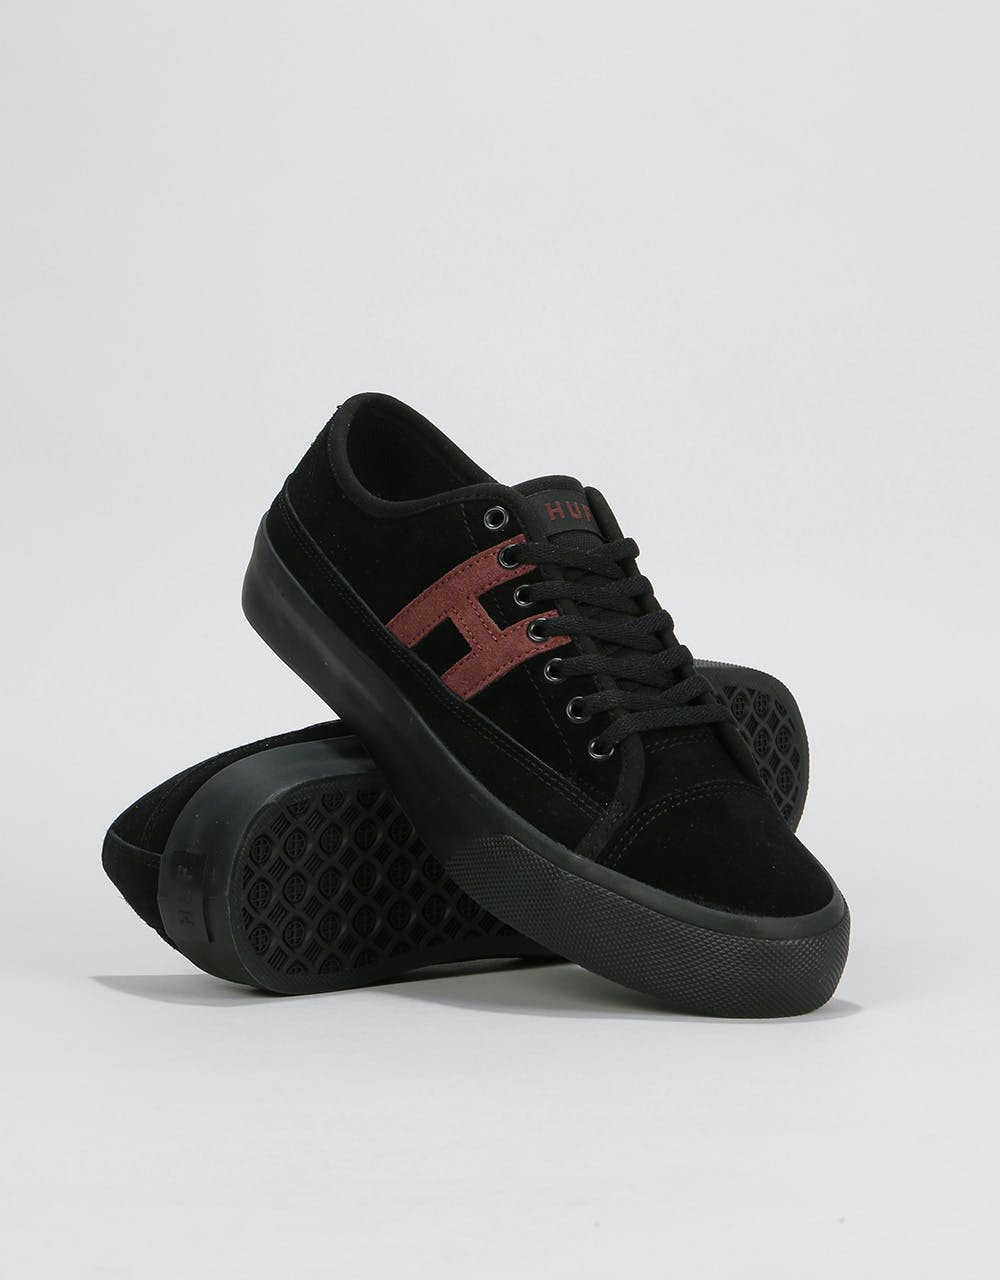 HUF Hupper 2 Low Skate Shoes - Black